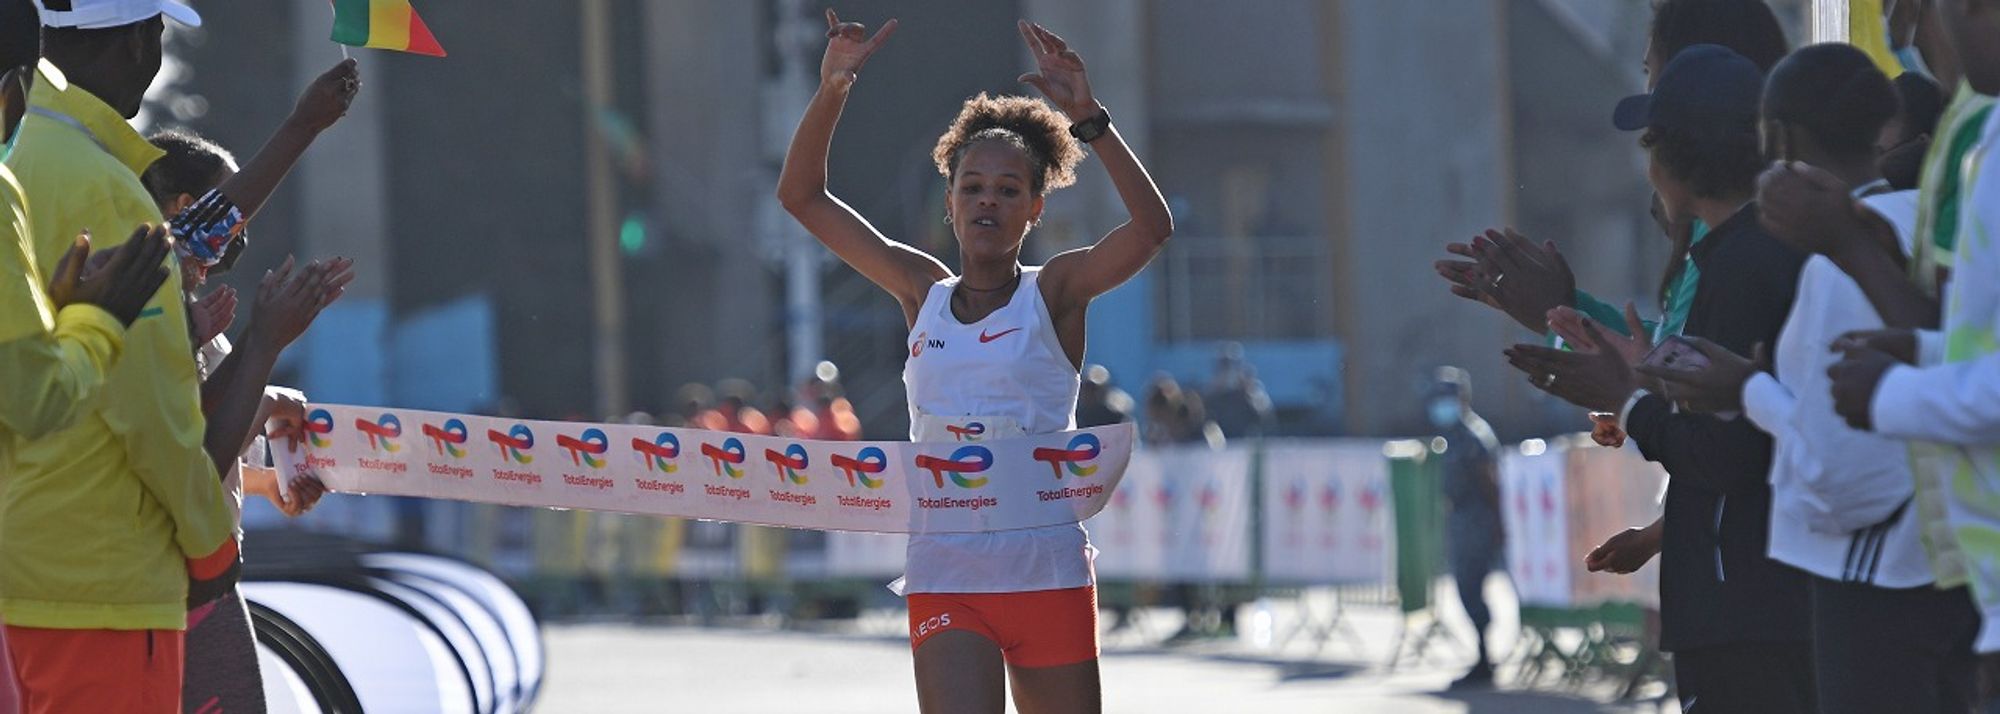 World half marathon bronze medallist clocks 31:17, taking 38 seconds off the race record